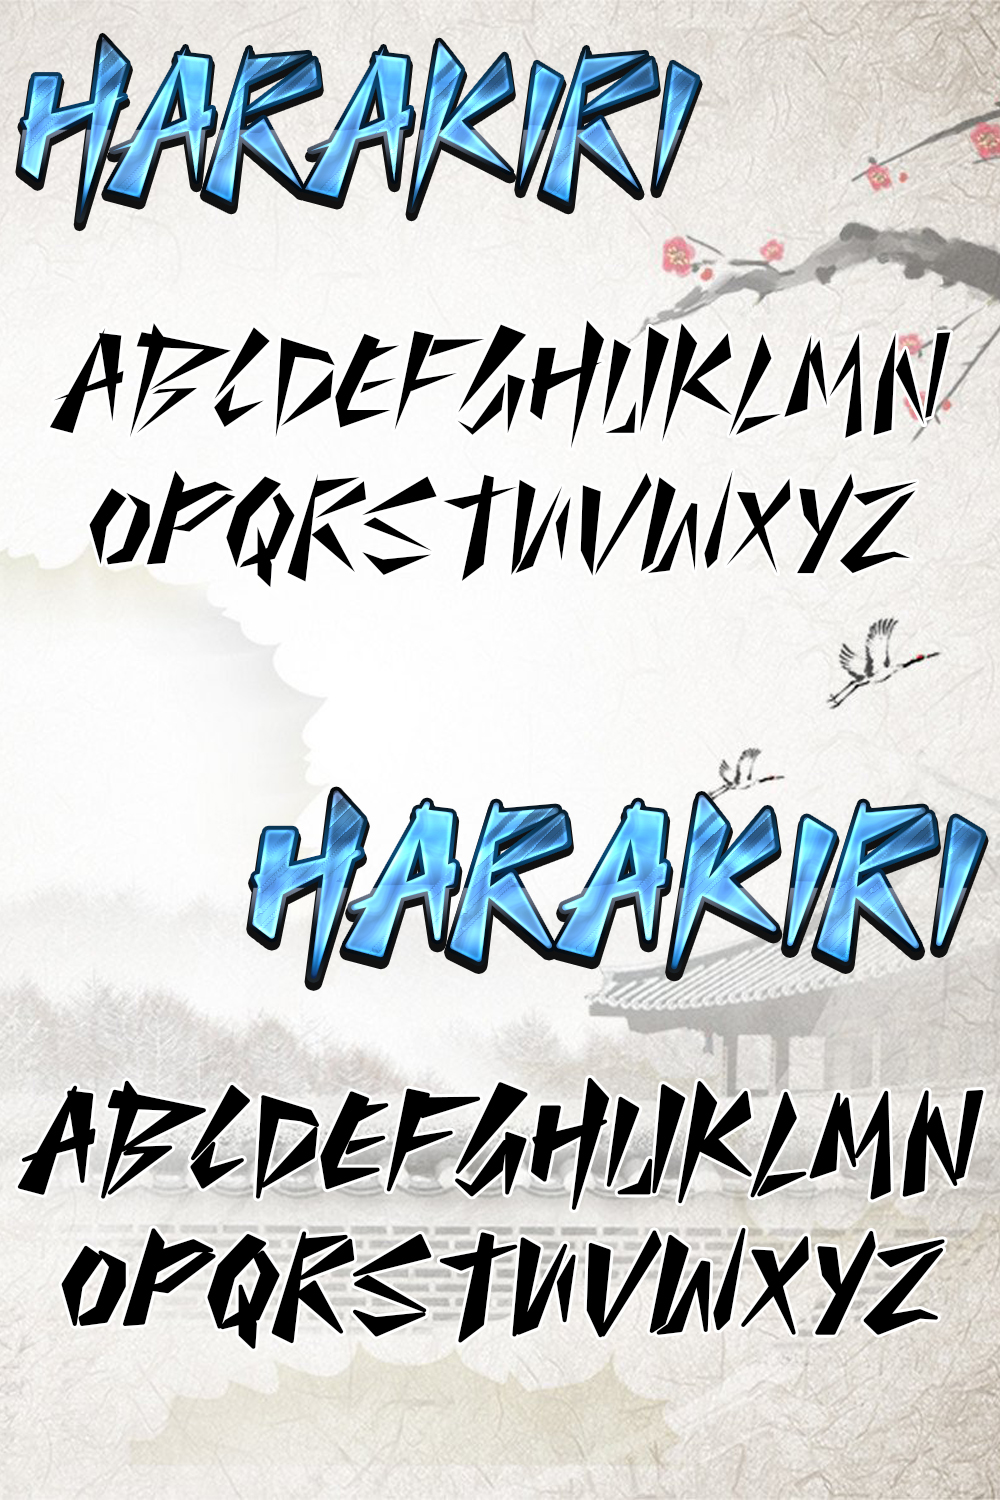 Harakiri font of pinterest.